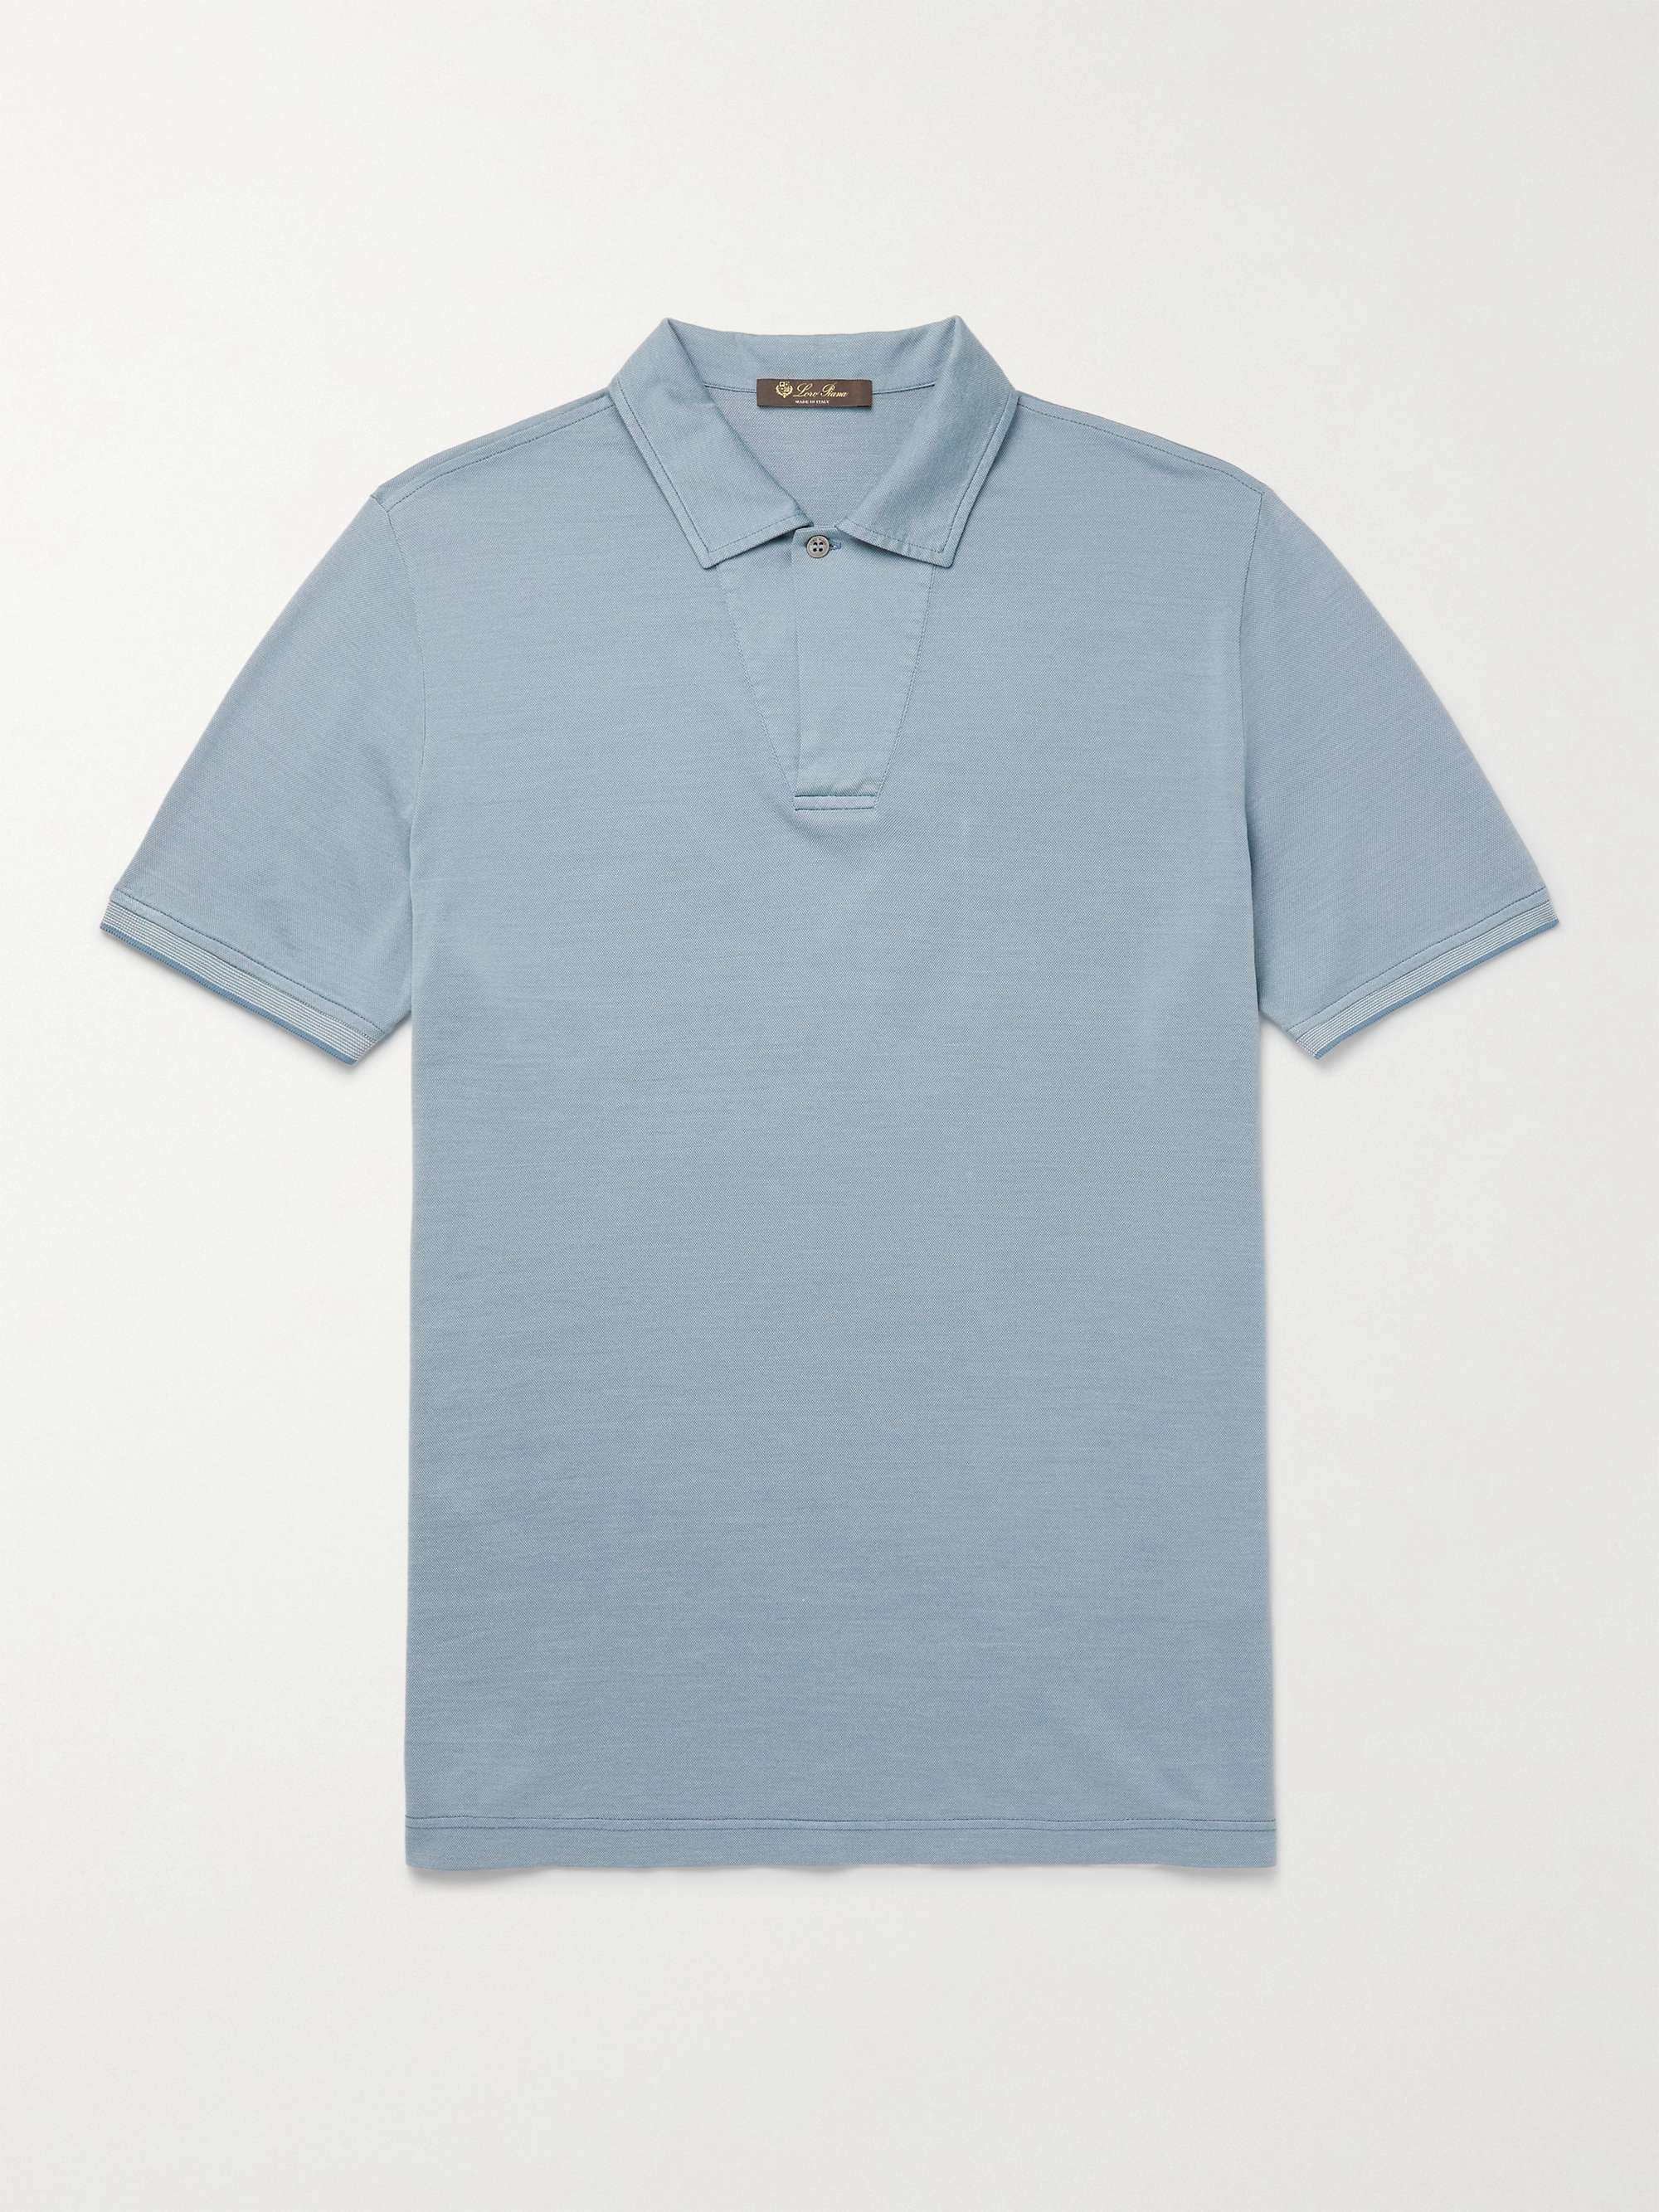 Port & Company Mens Durable Perfect Pique Polo Shirt_Lime